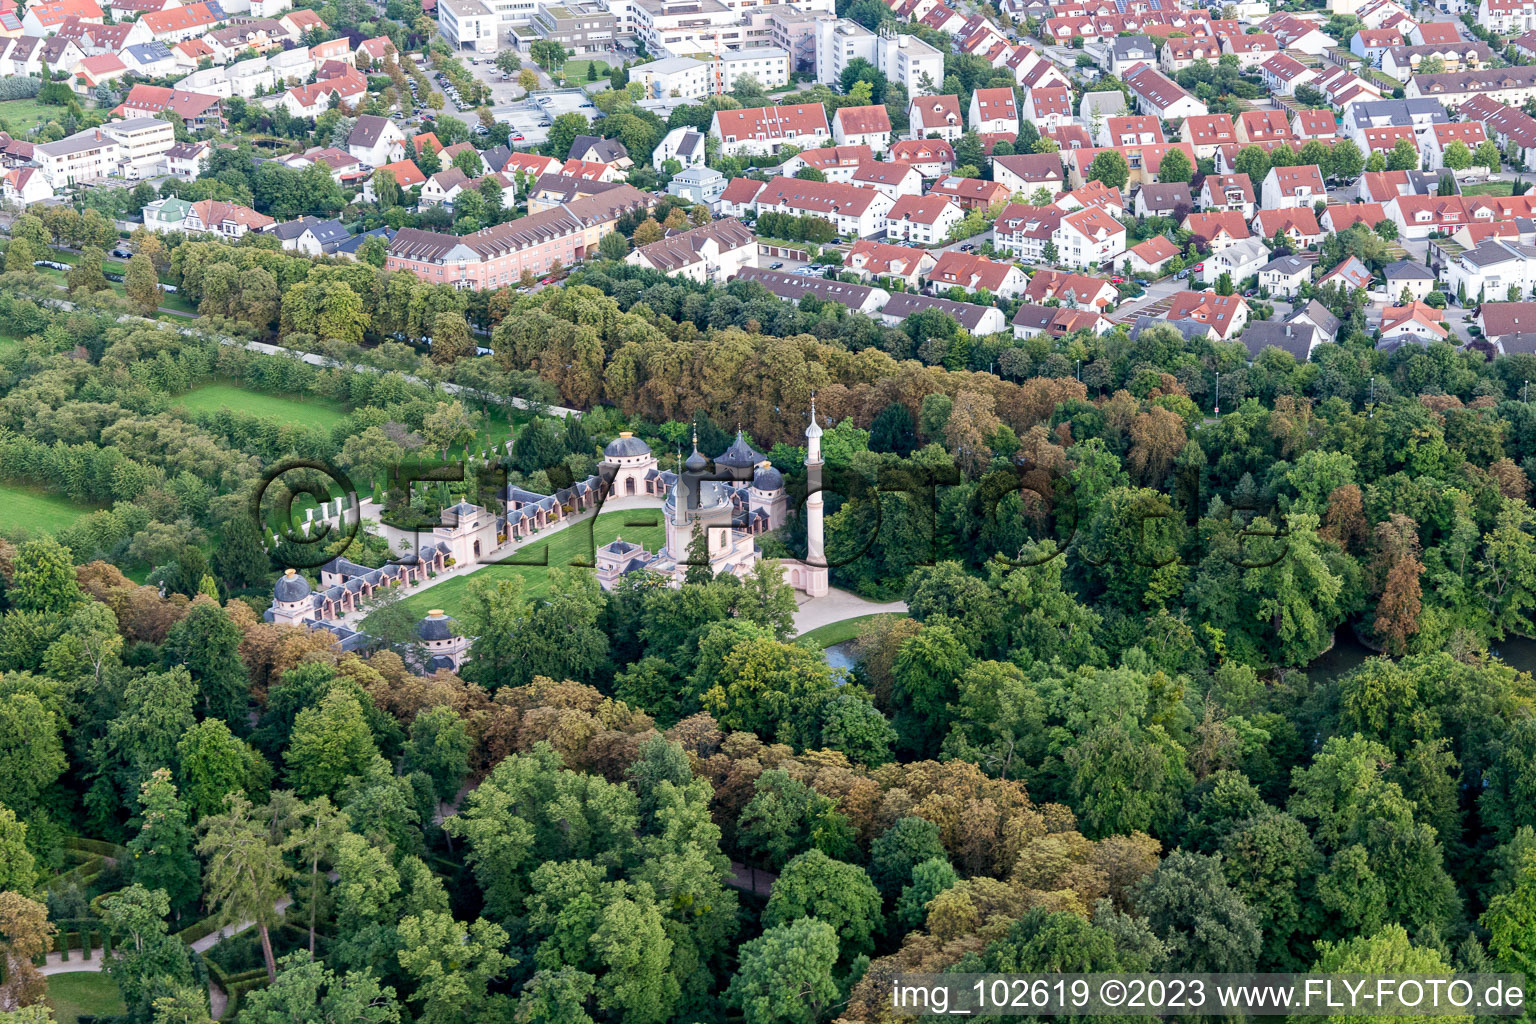 Aerial view of Schwetzingen in the state Baden-Wuerttemberg, Germany